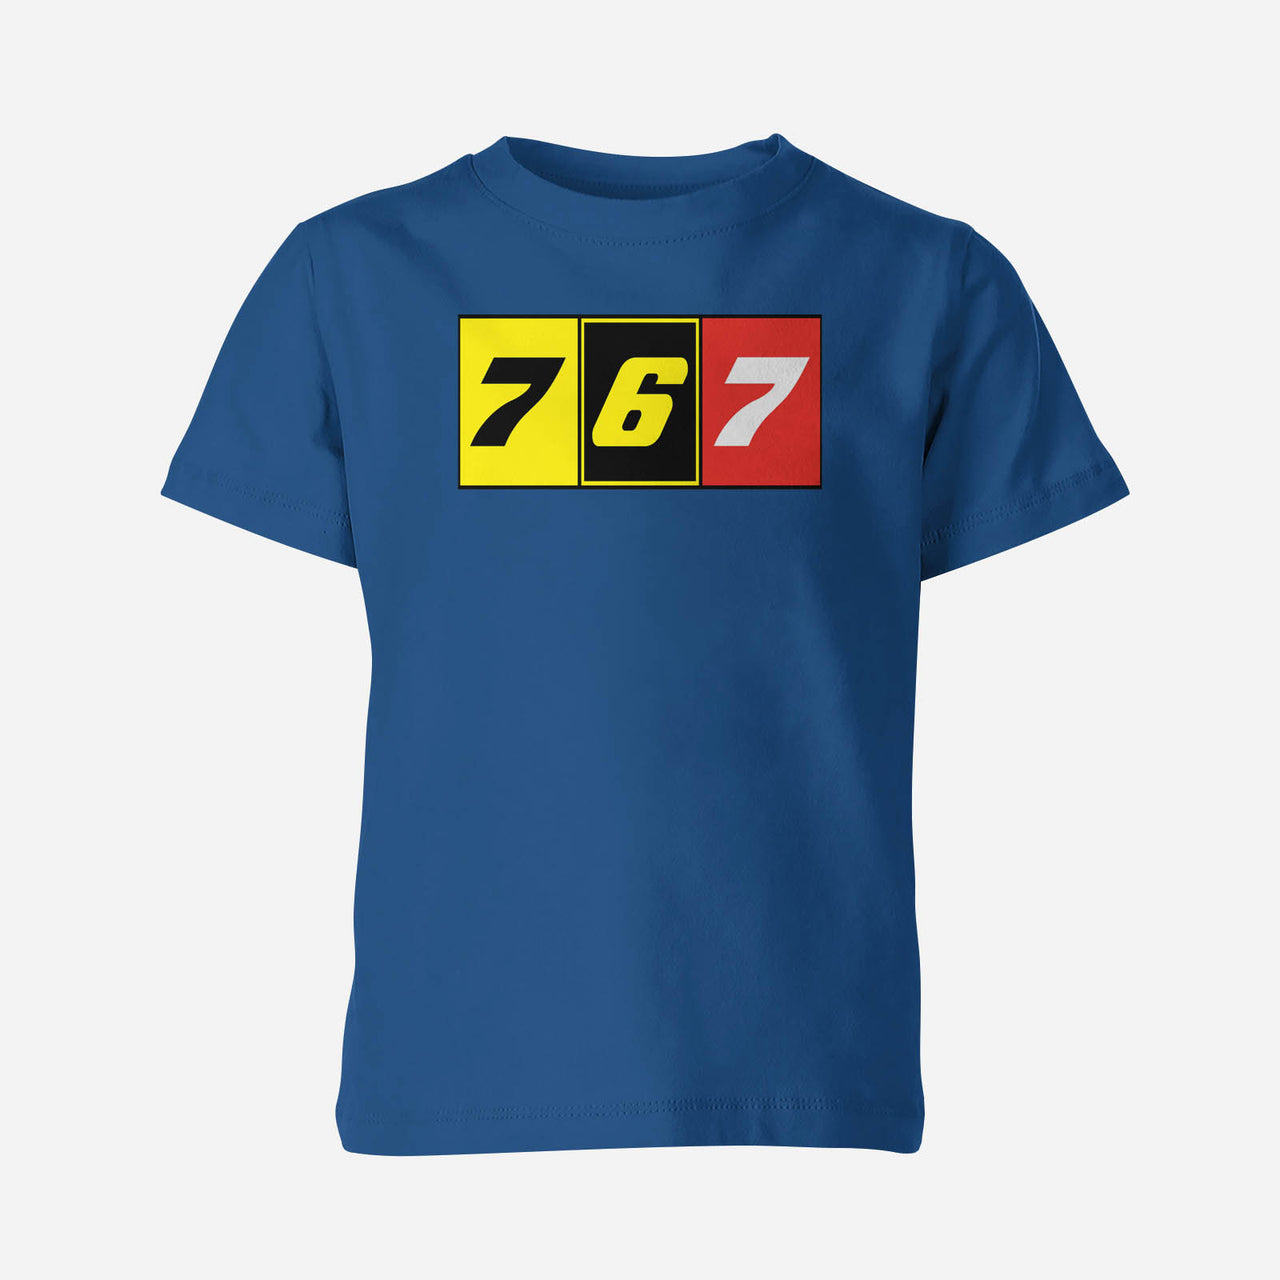 Flat Colourful 767 Designed Children T-Shirts